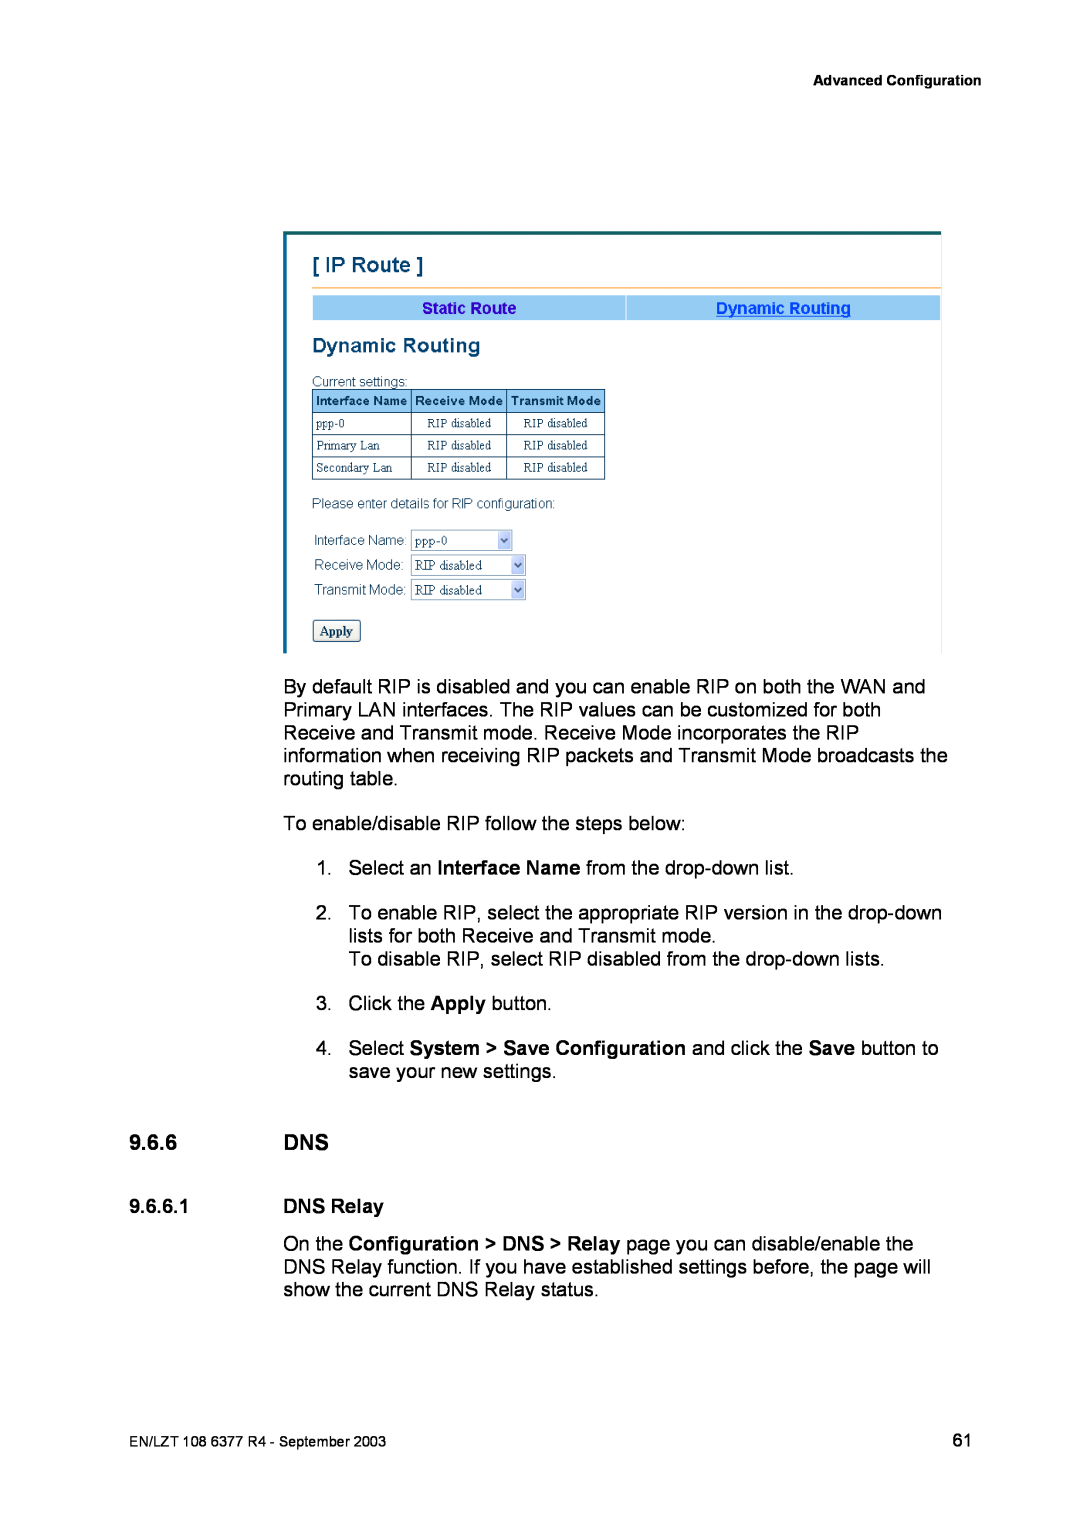 Garmin HN294DP/DI manual 9.6.6 DNS, DNS Relay 